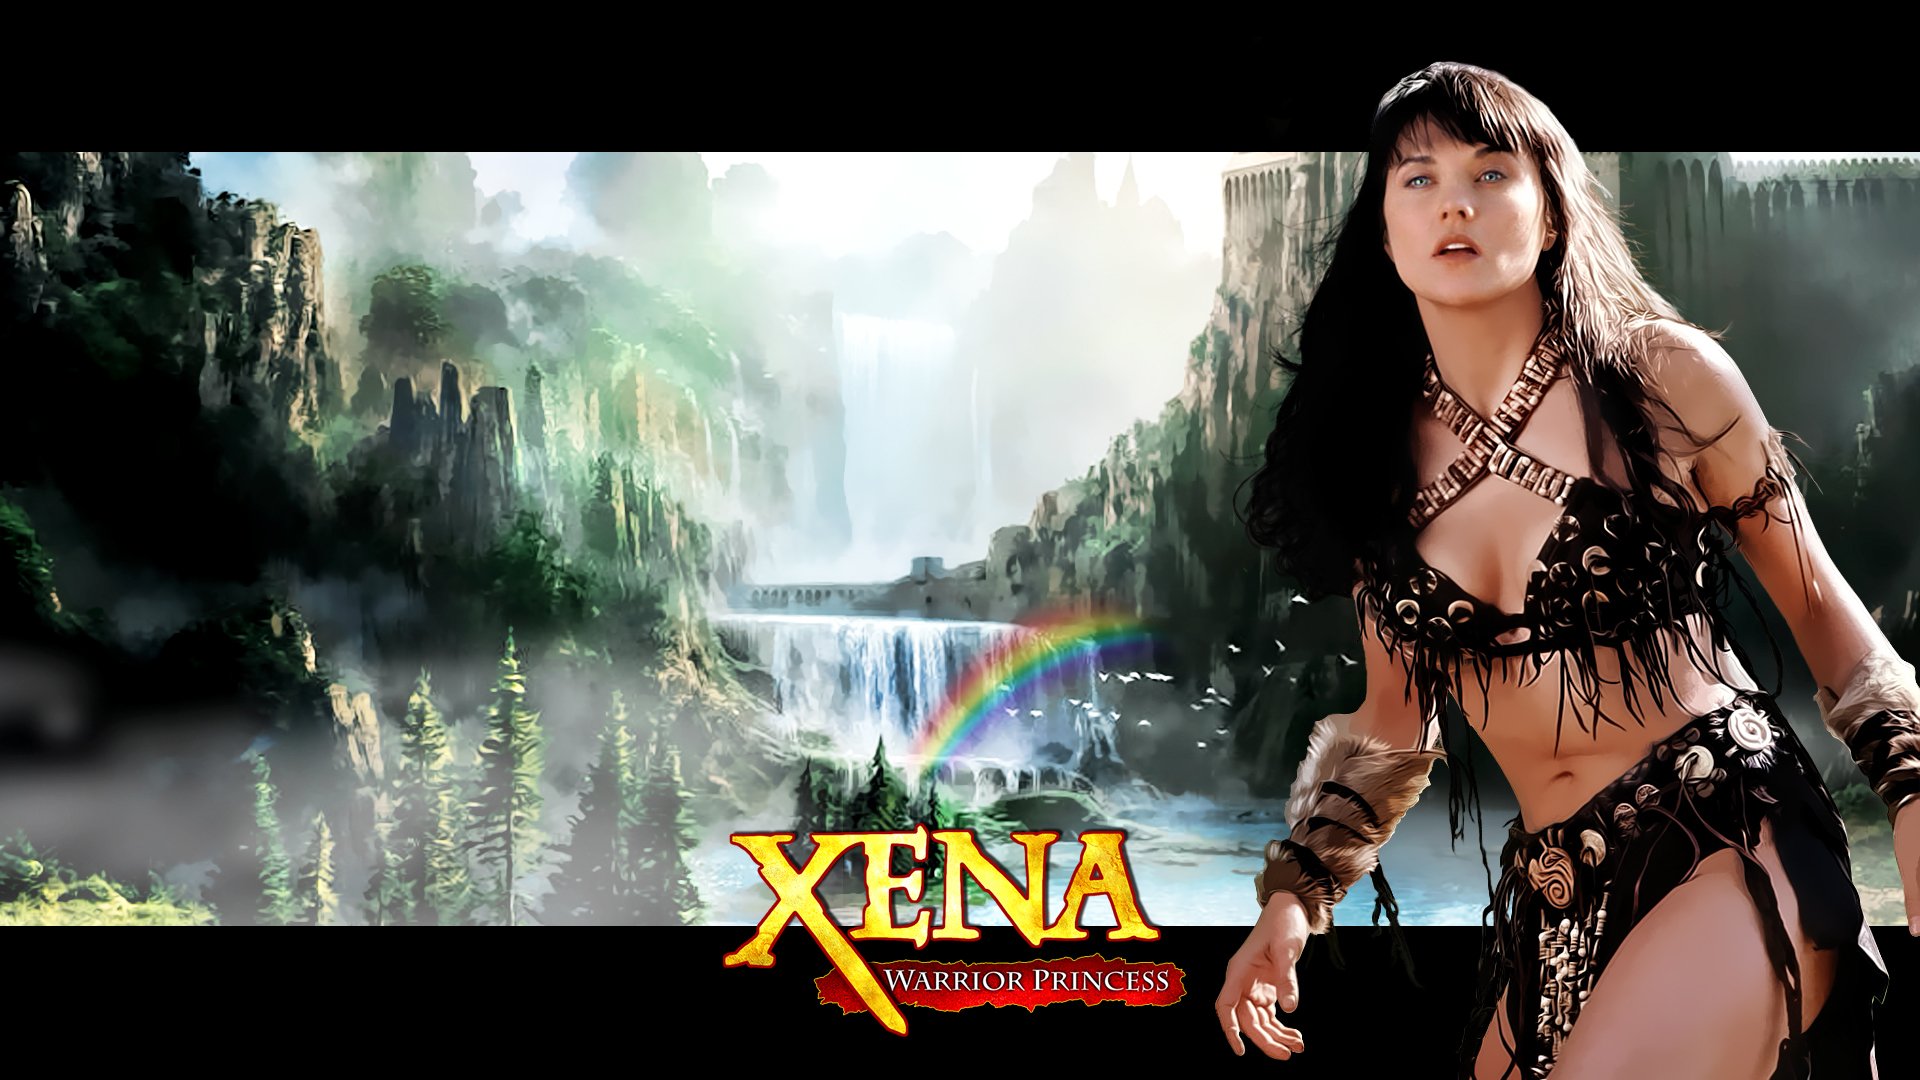 Xena The Warrior Princess HD Wallpaper Background Image